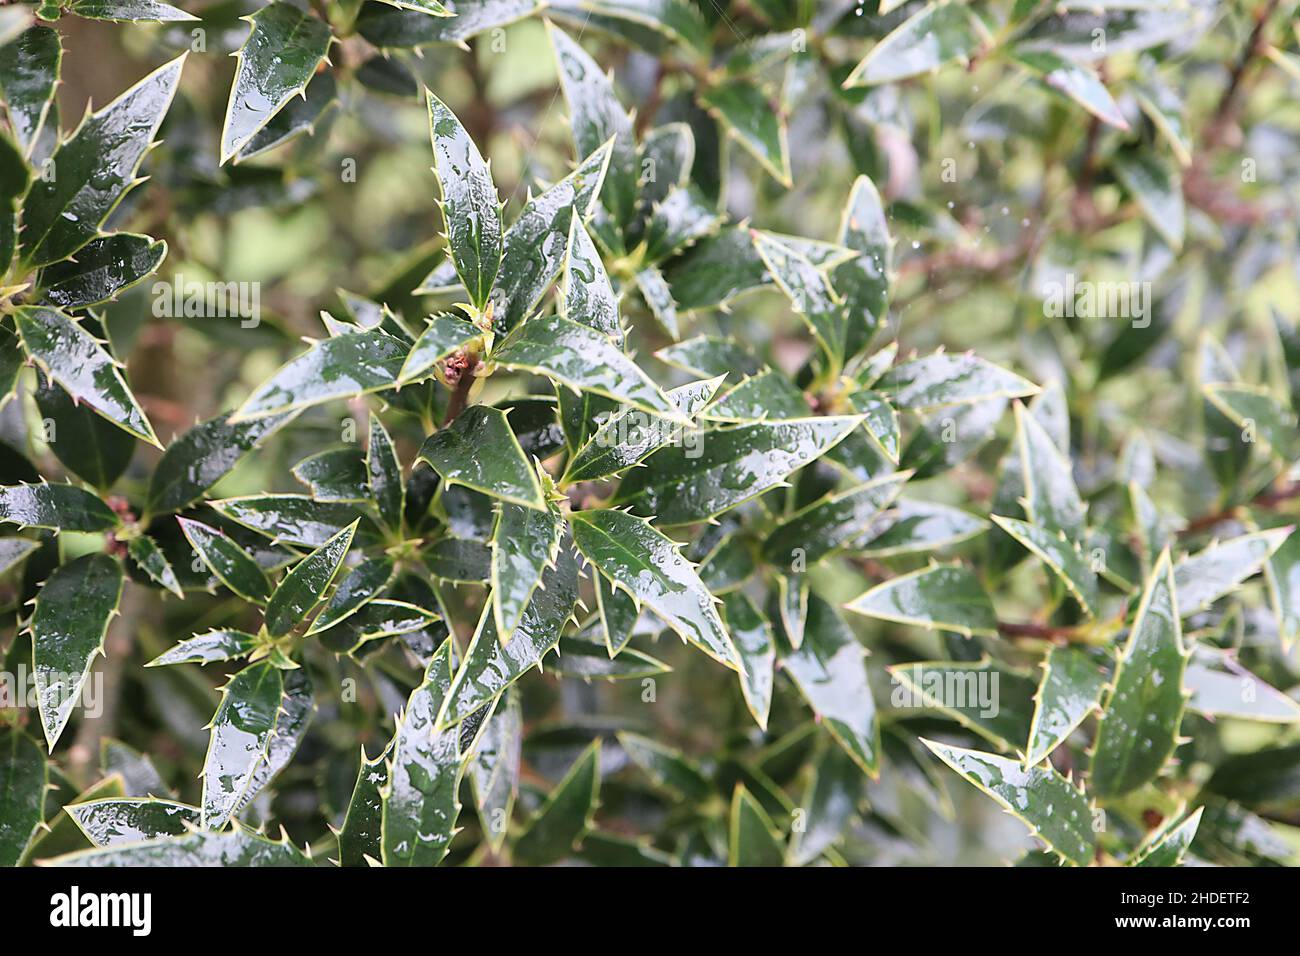 Ilex aquifolium ‘Hascombensis’ holly Hascombensis – small spiny glossy dark green leaves with elongated tip, black stems,  January, England, UK Stock Photo